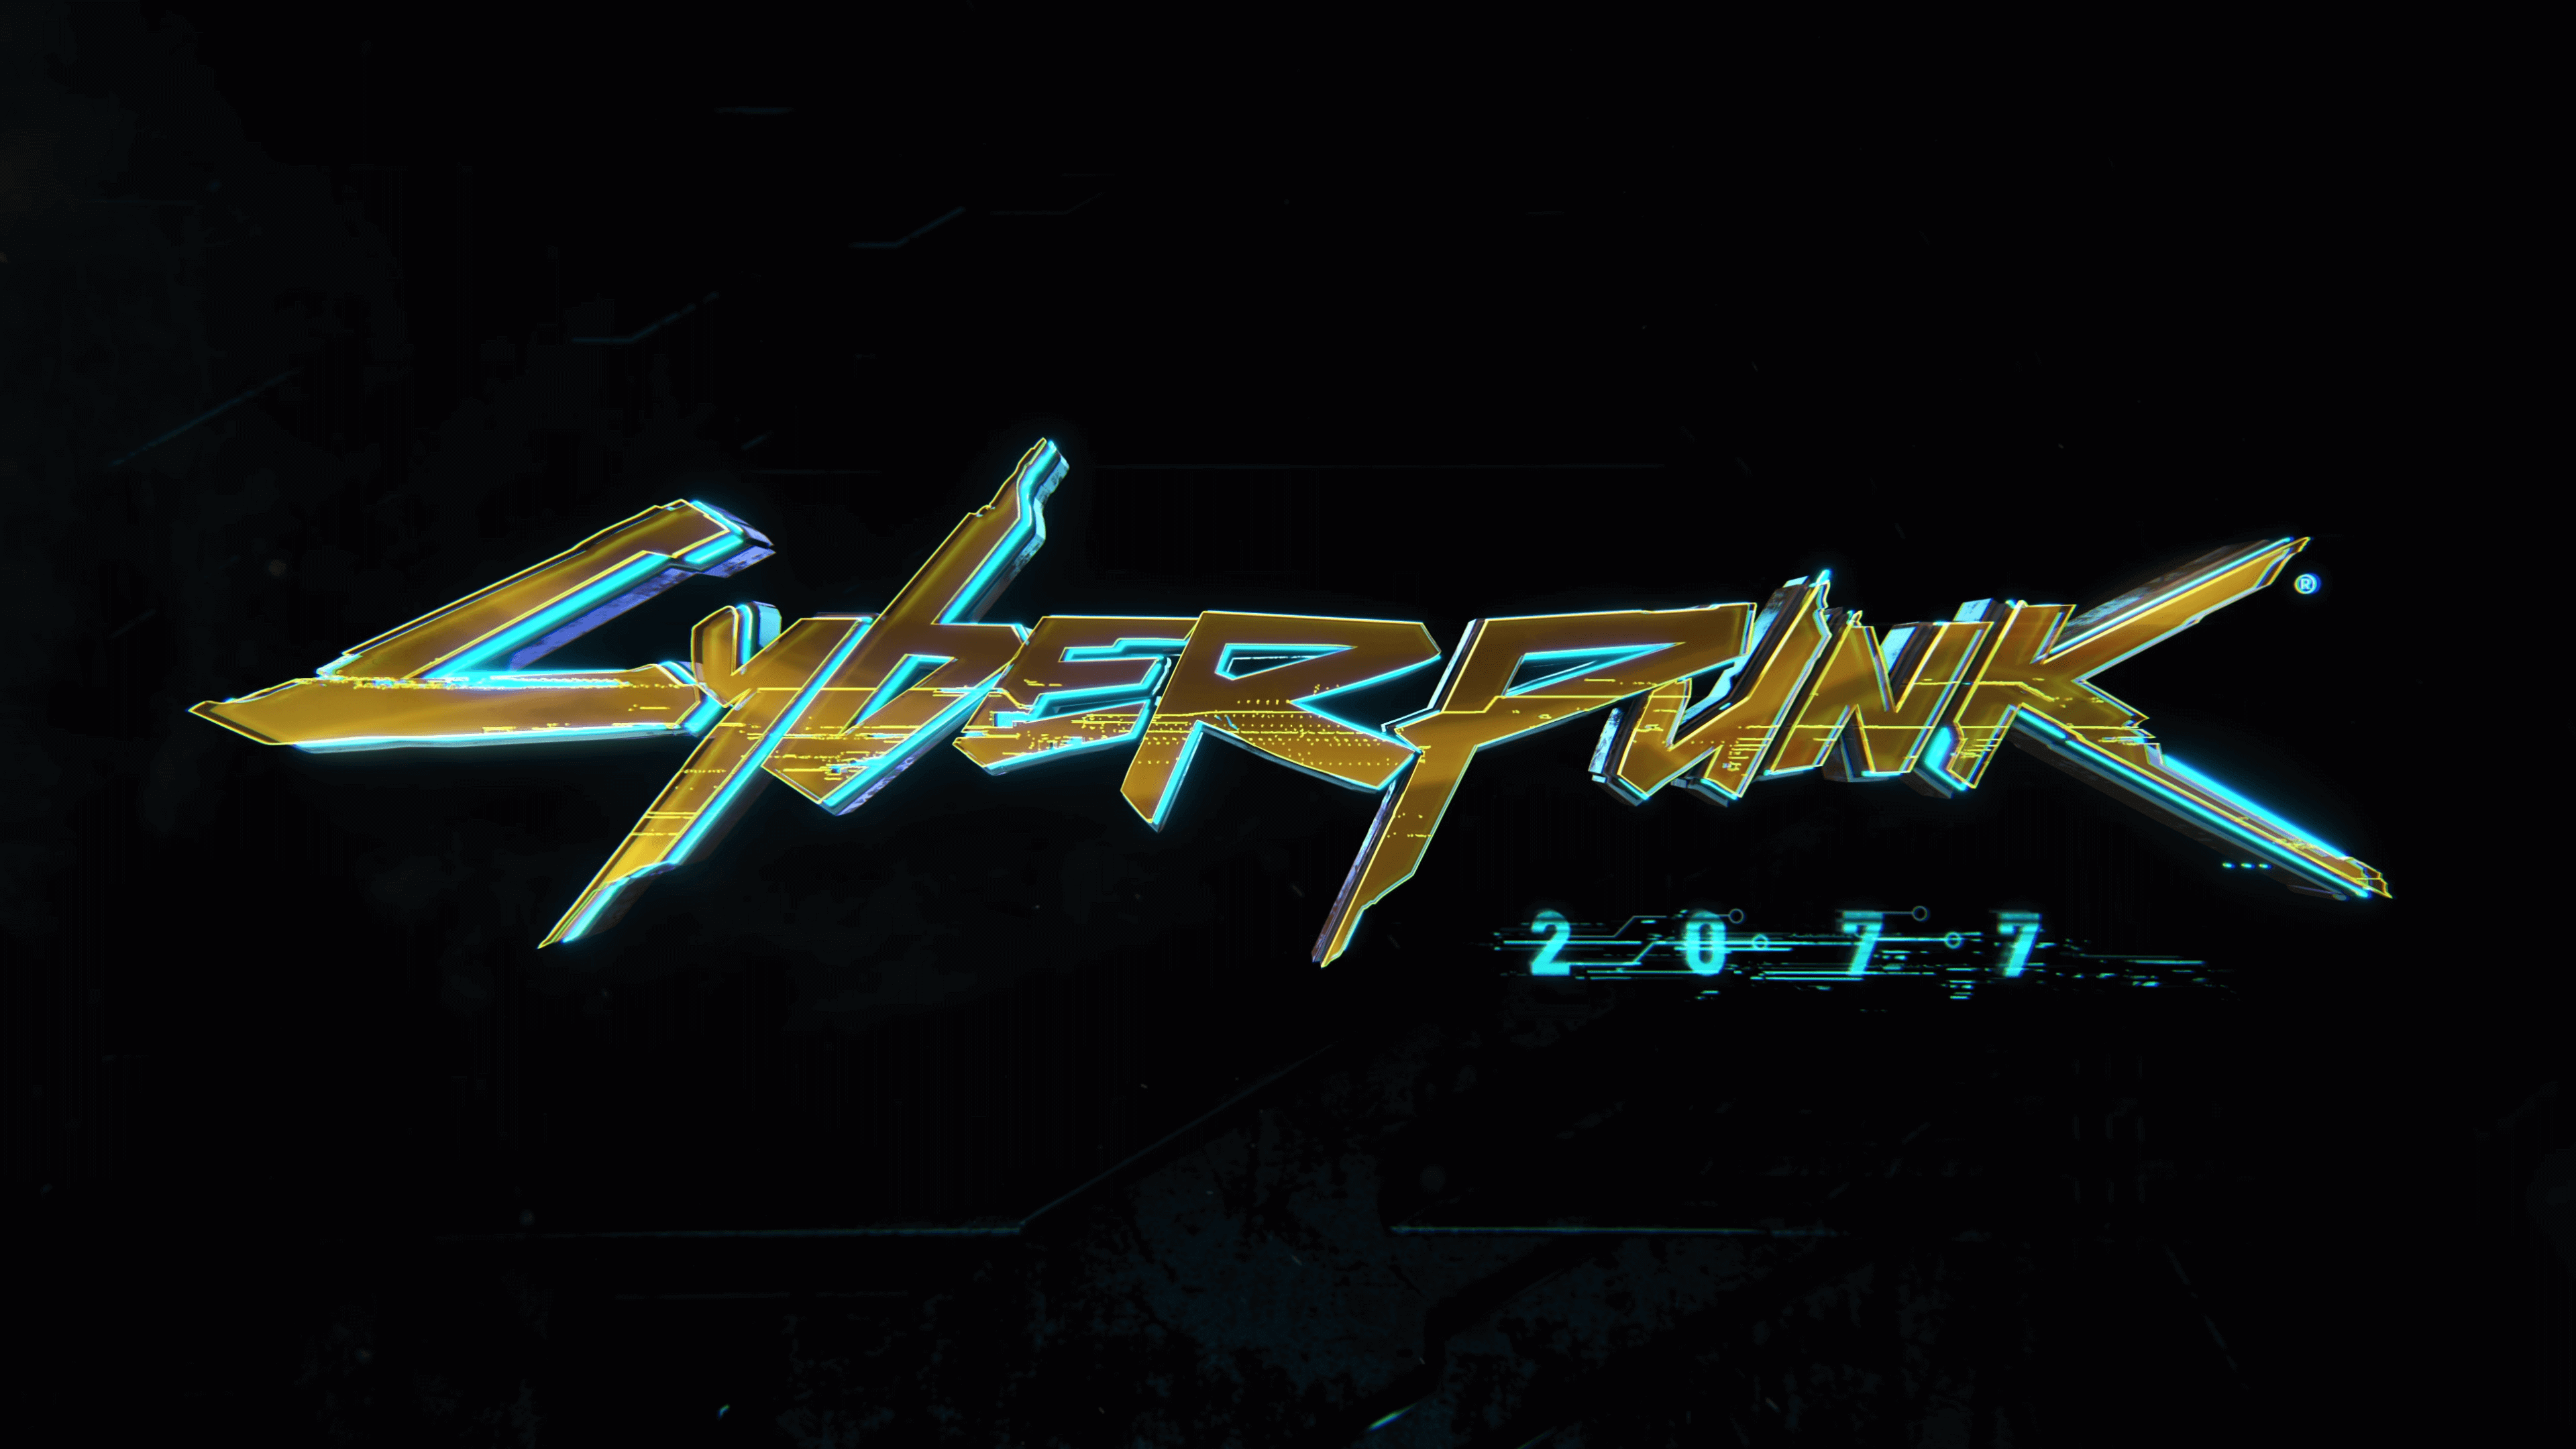 Cyberpunk logo wallpaper фото 1